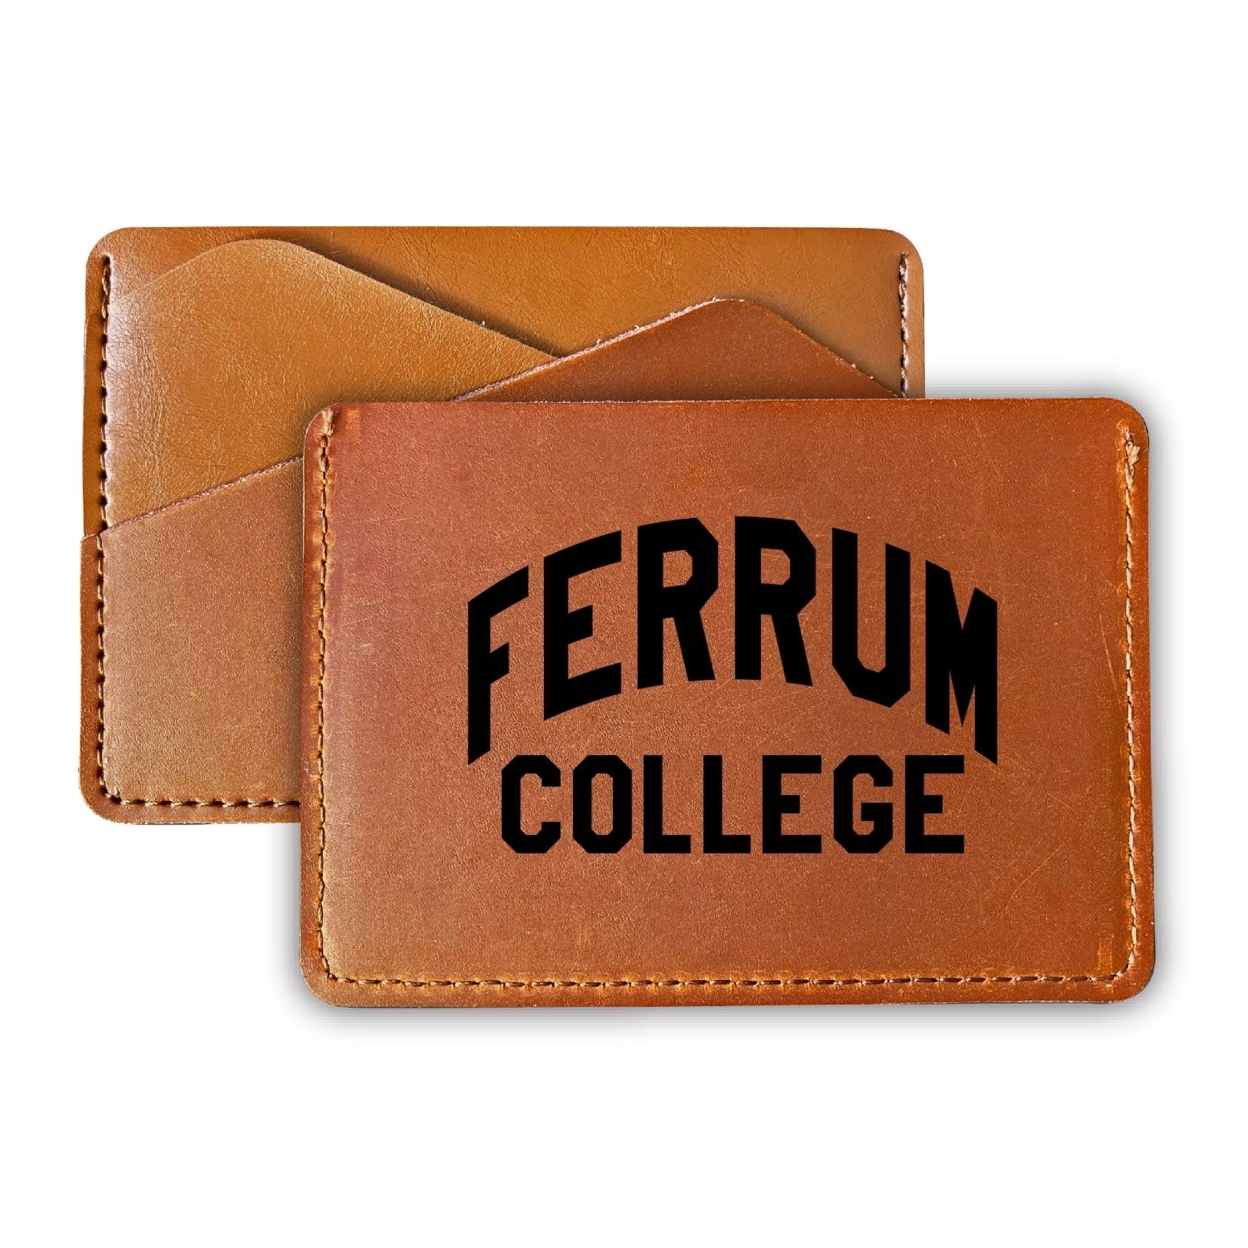 Ferrum College College Leather Card Holder Wallet